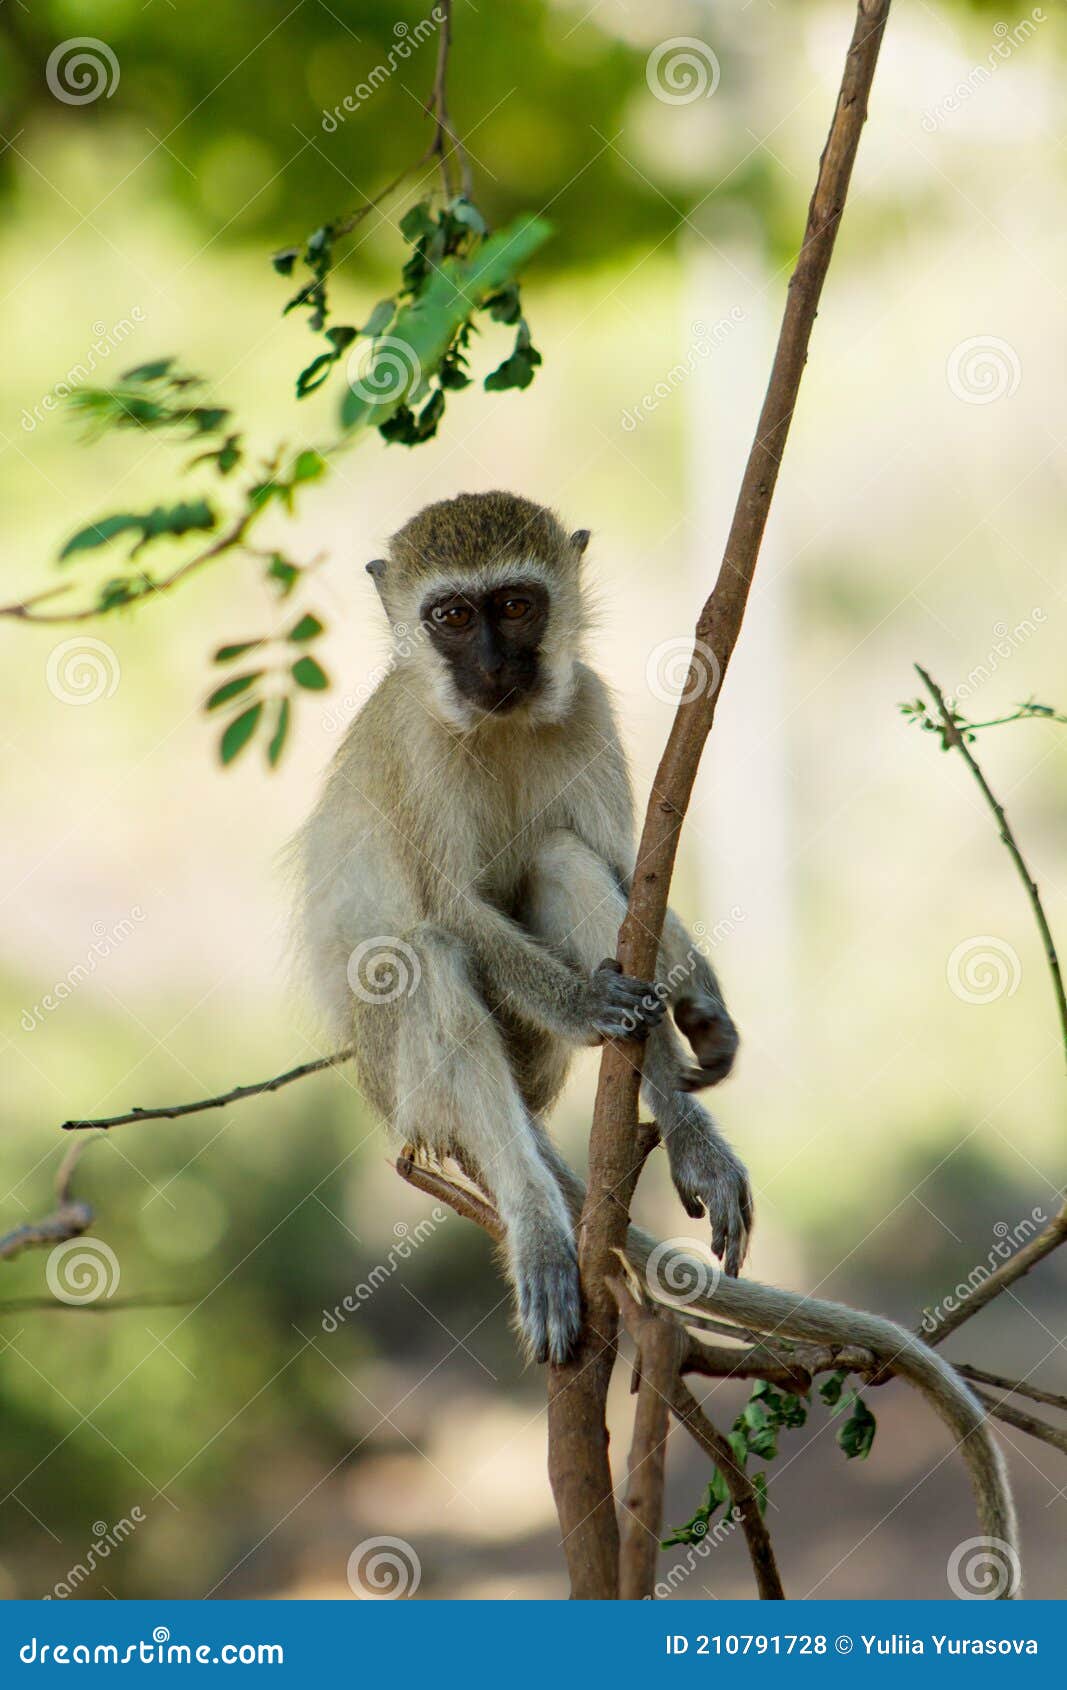 monkey climbing on a tree